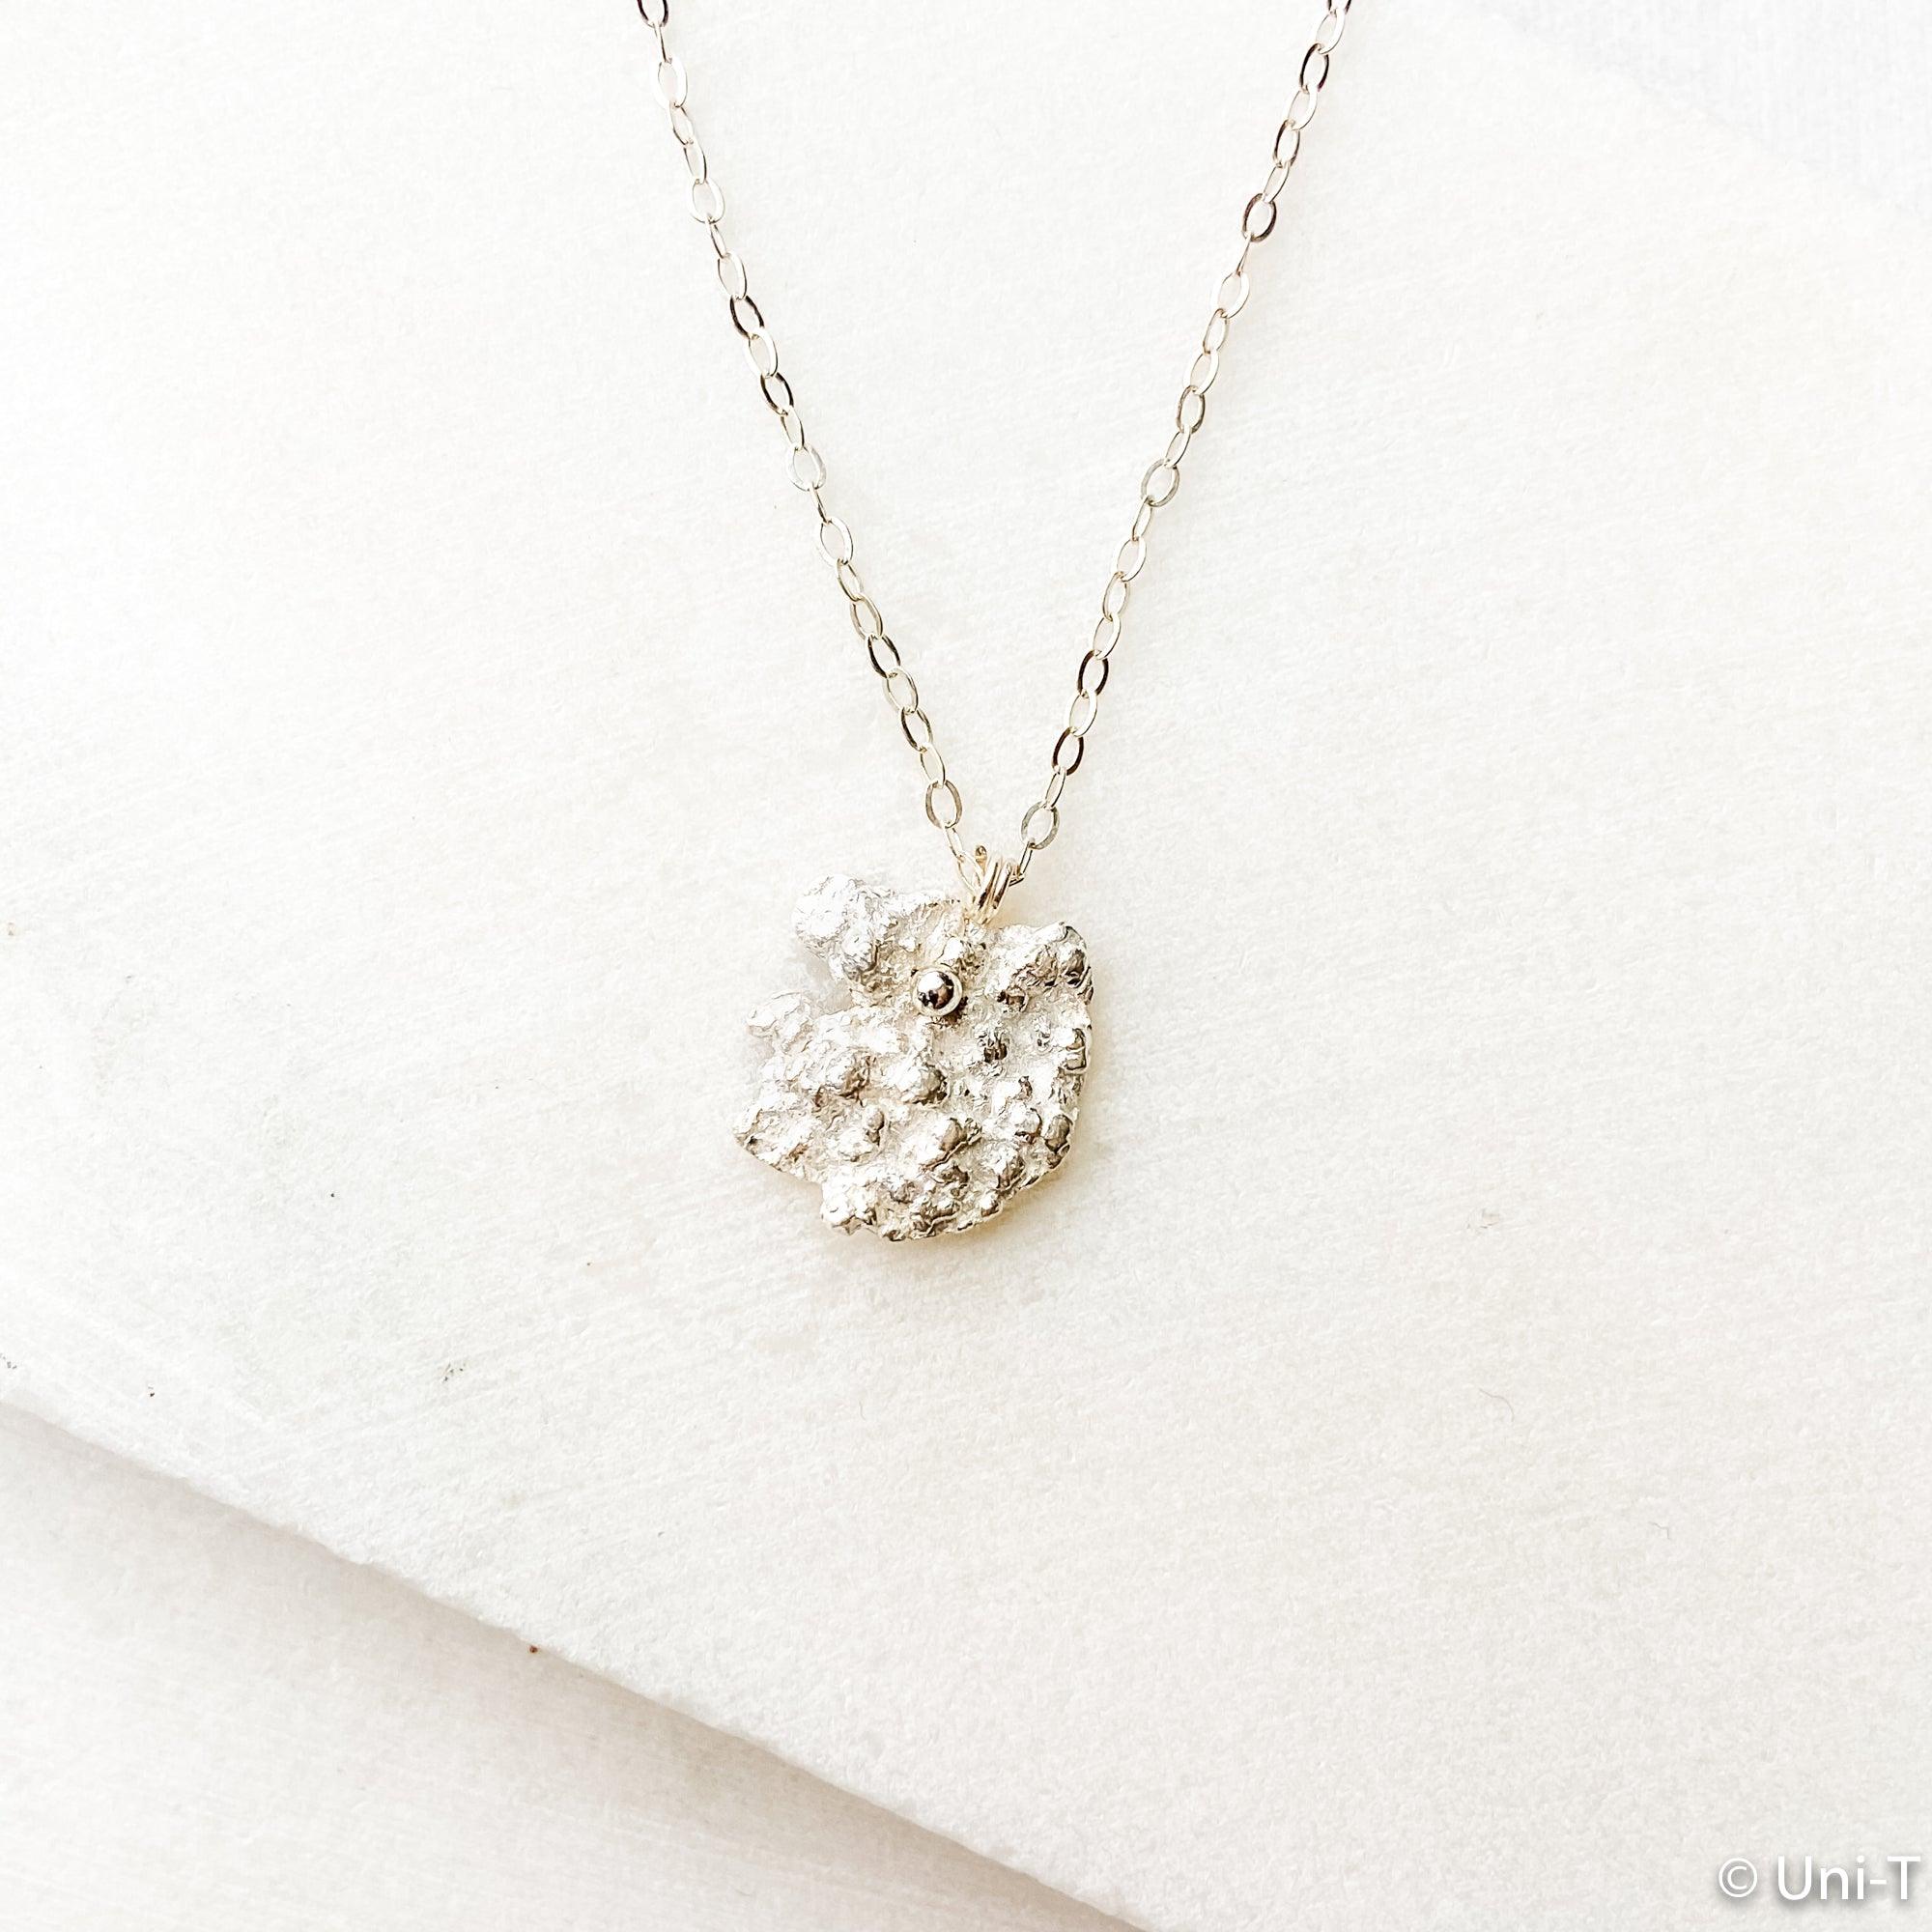 Silver Lava Impression Necklace, Precious Metal Clay 99% Silver with Sterling Silver Chain - Uni-T